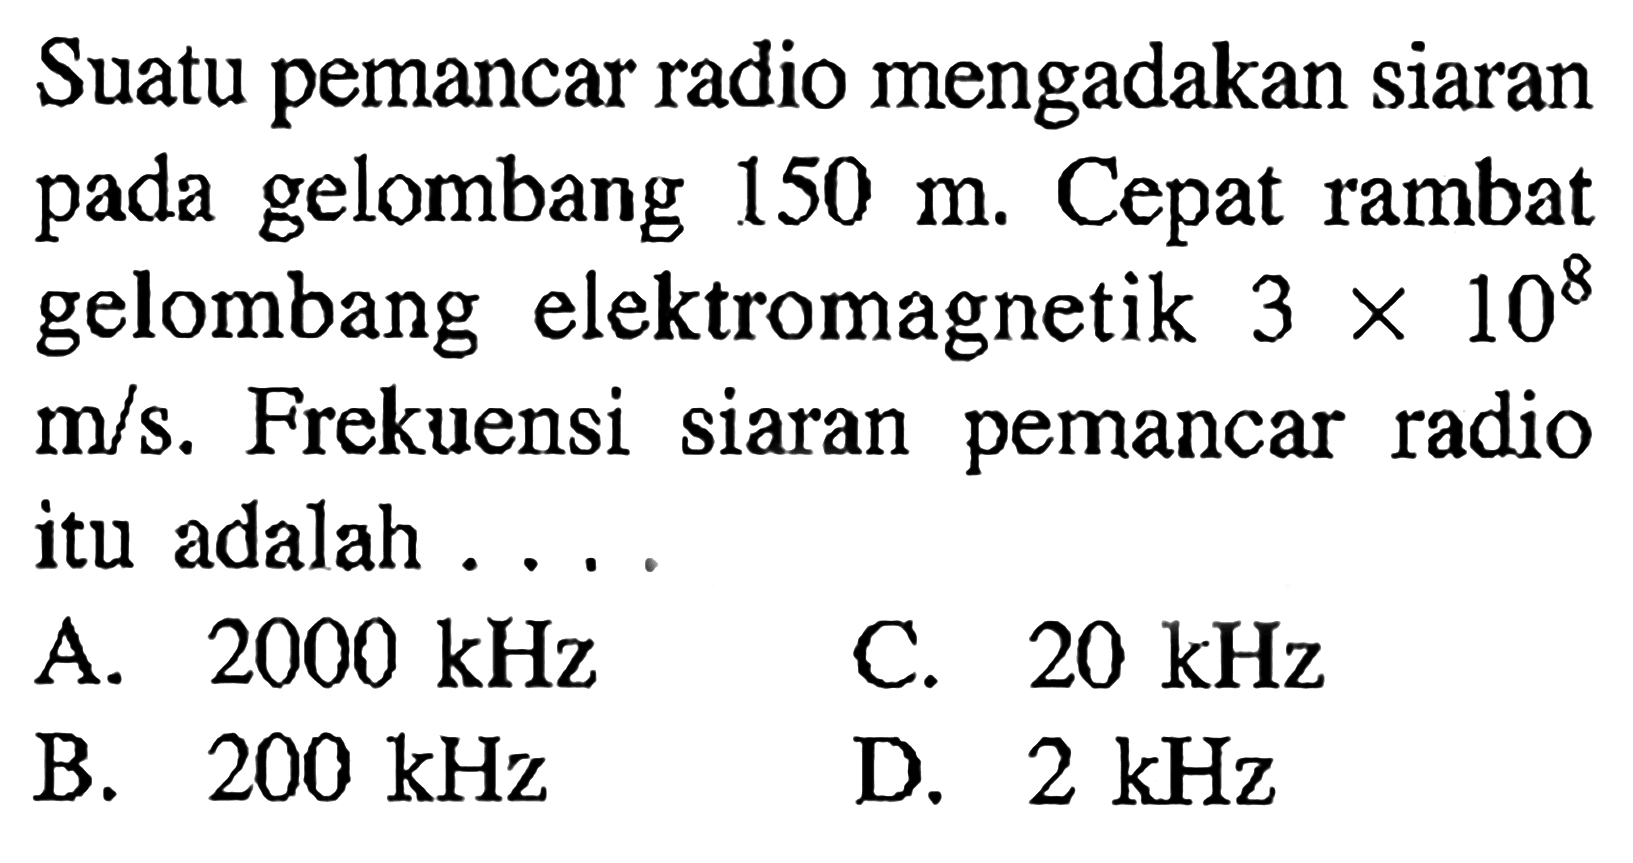 Suatu pemancar radio mengadakan siaran pada gelombang 150 m. Cepat rambat gelombang elektromagnetik 3x10^8 m/s. Frekuensi siaran pemancar radio itu adalah ....